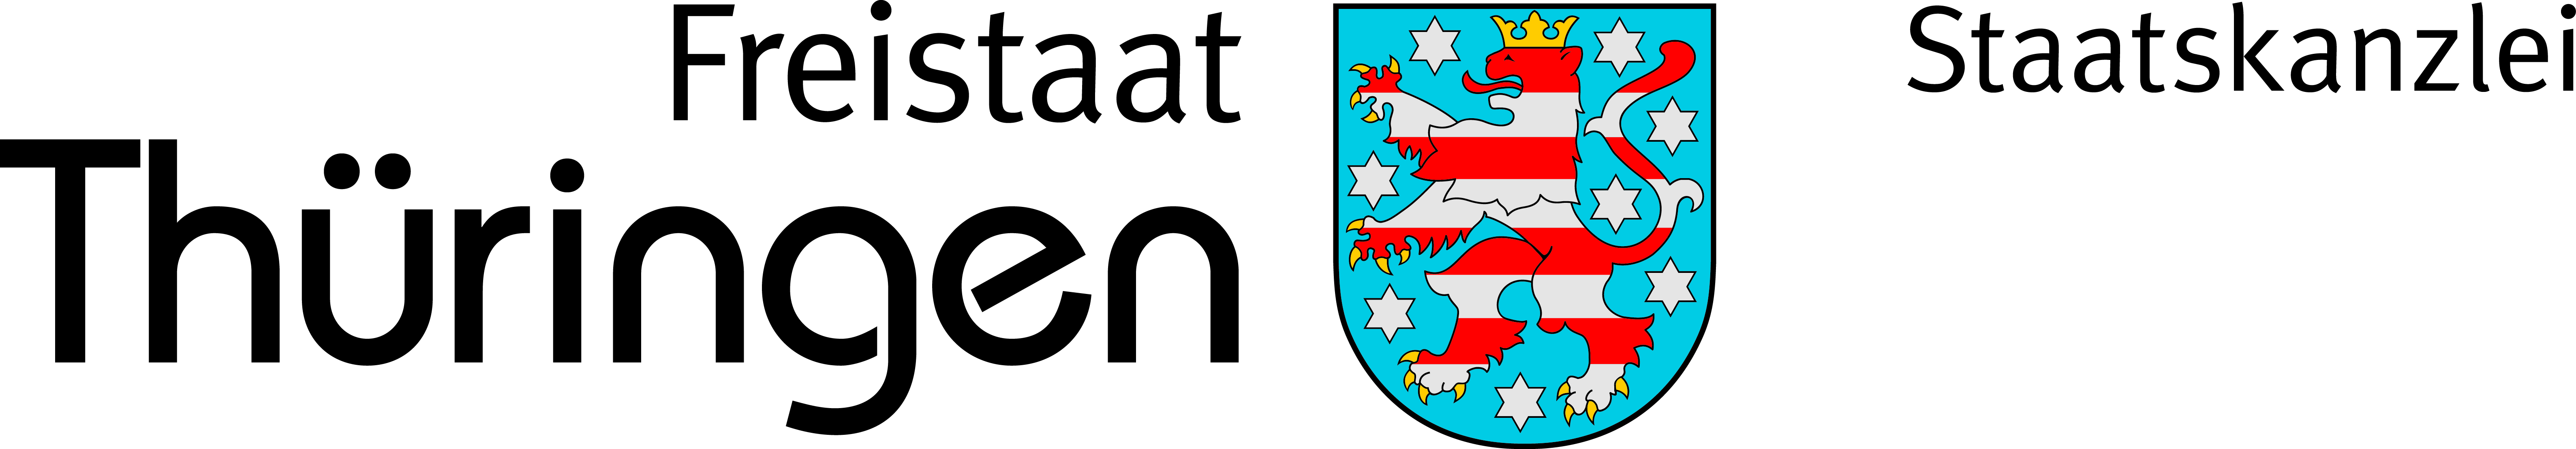 logo_Staatskanzlei_Thueringen